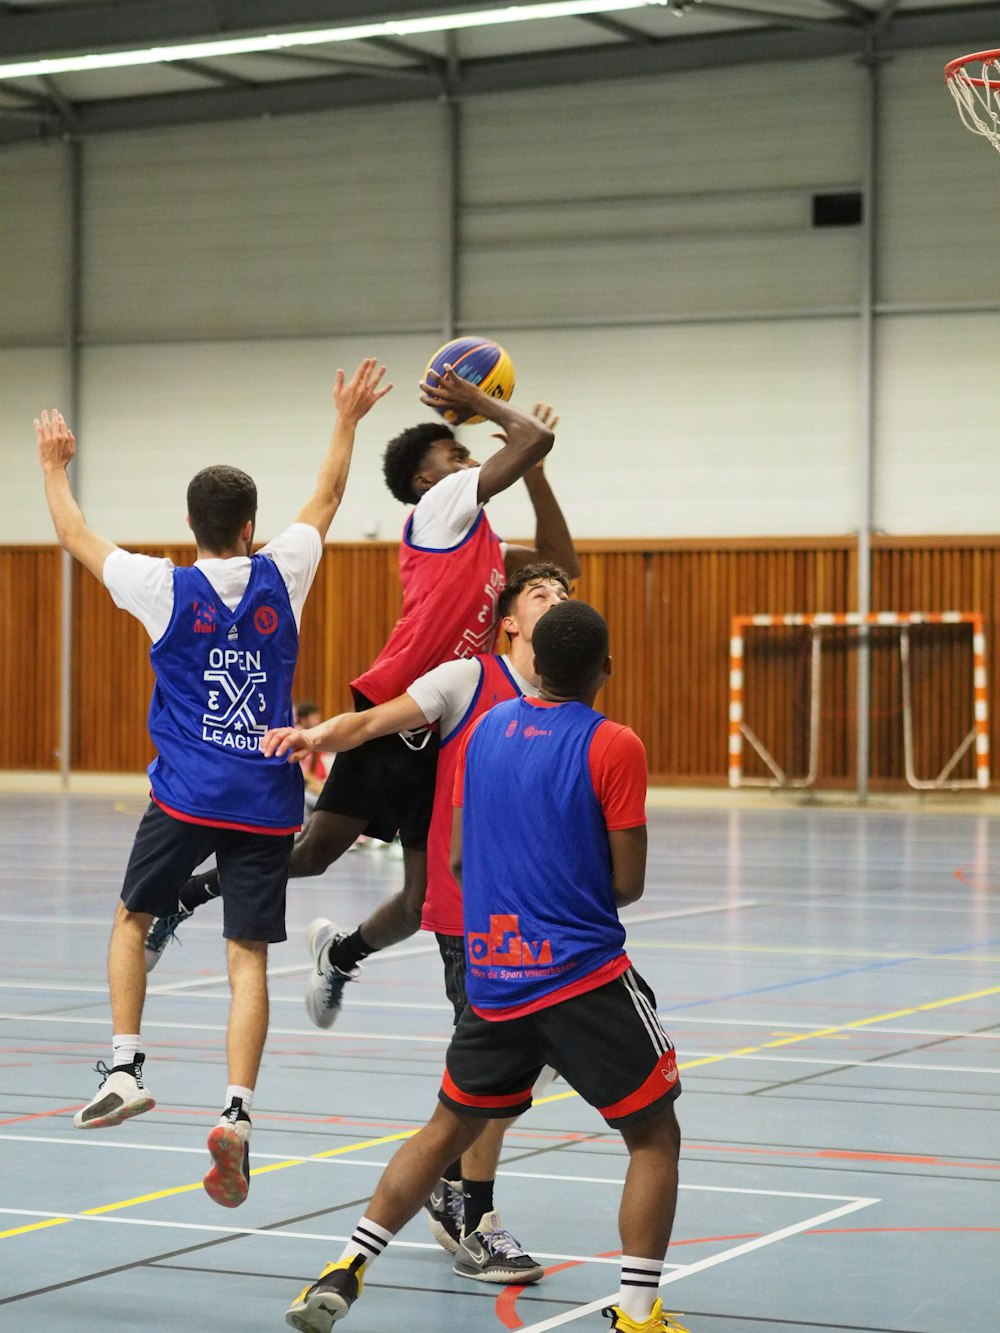 Eine Gruppe junger Männer spielt Basketball